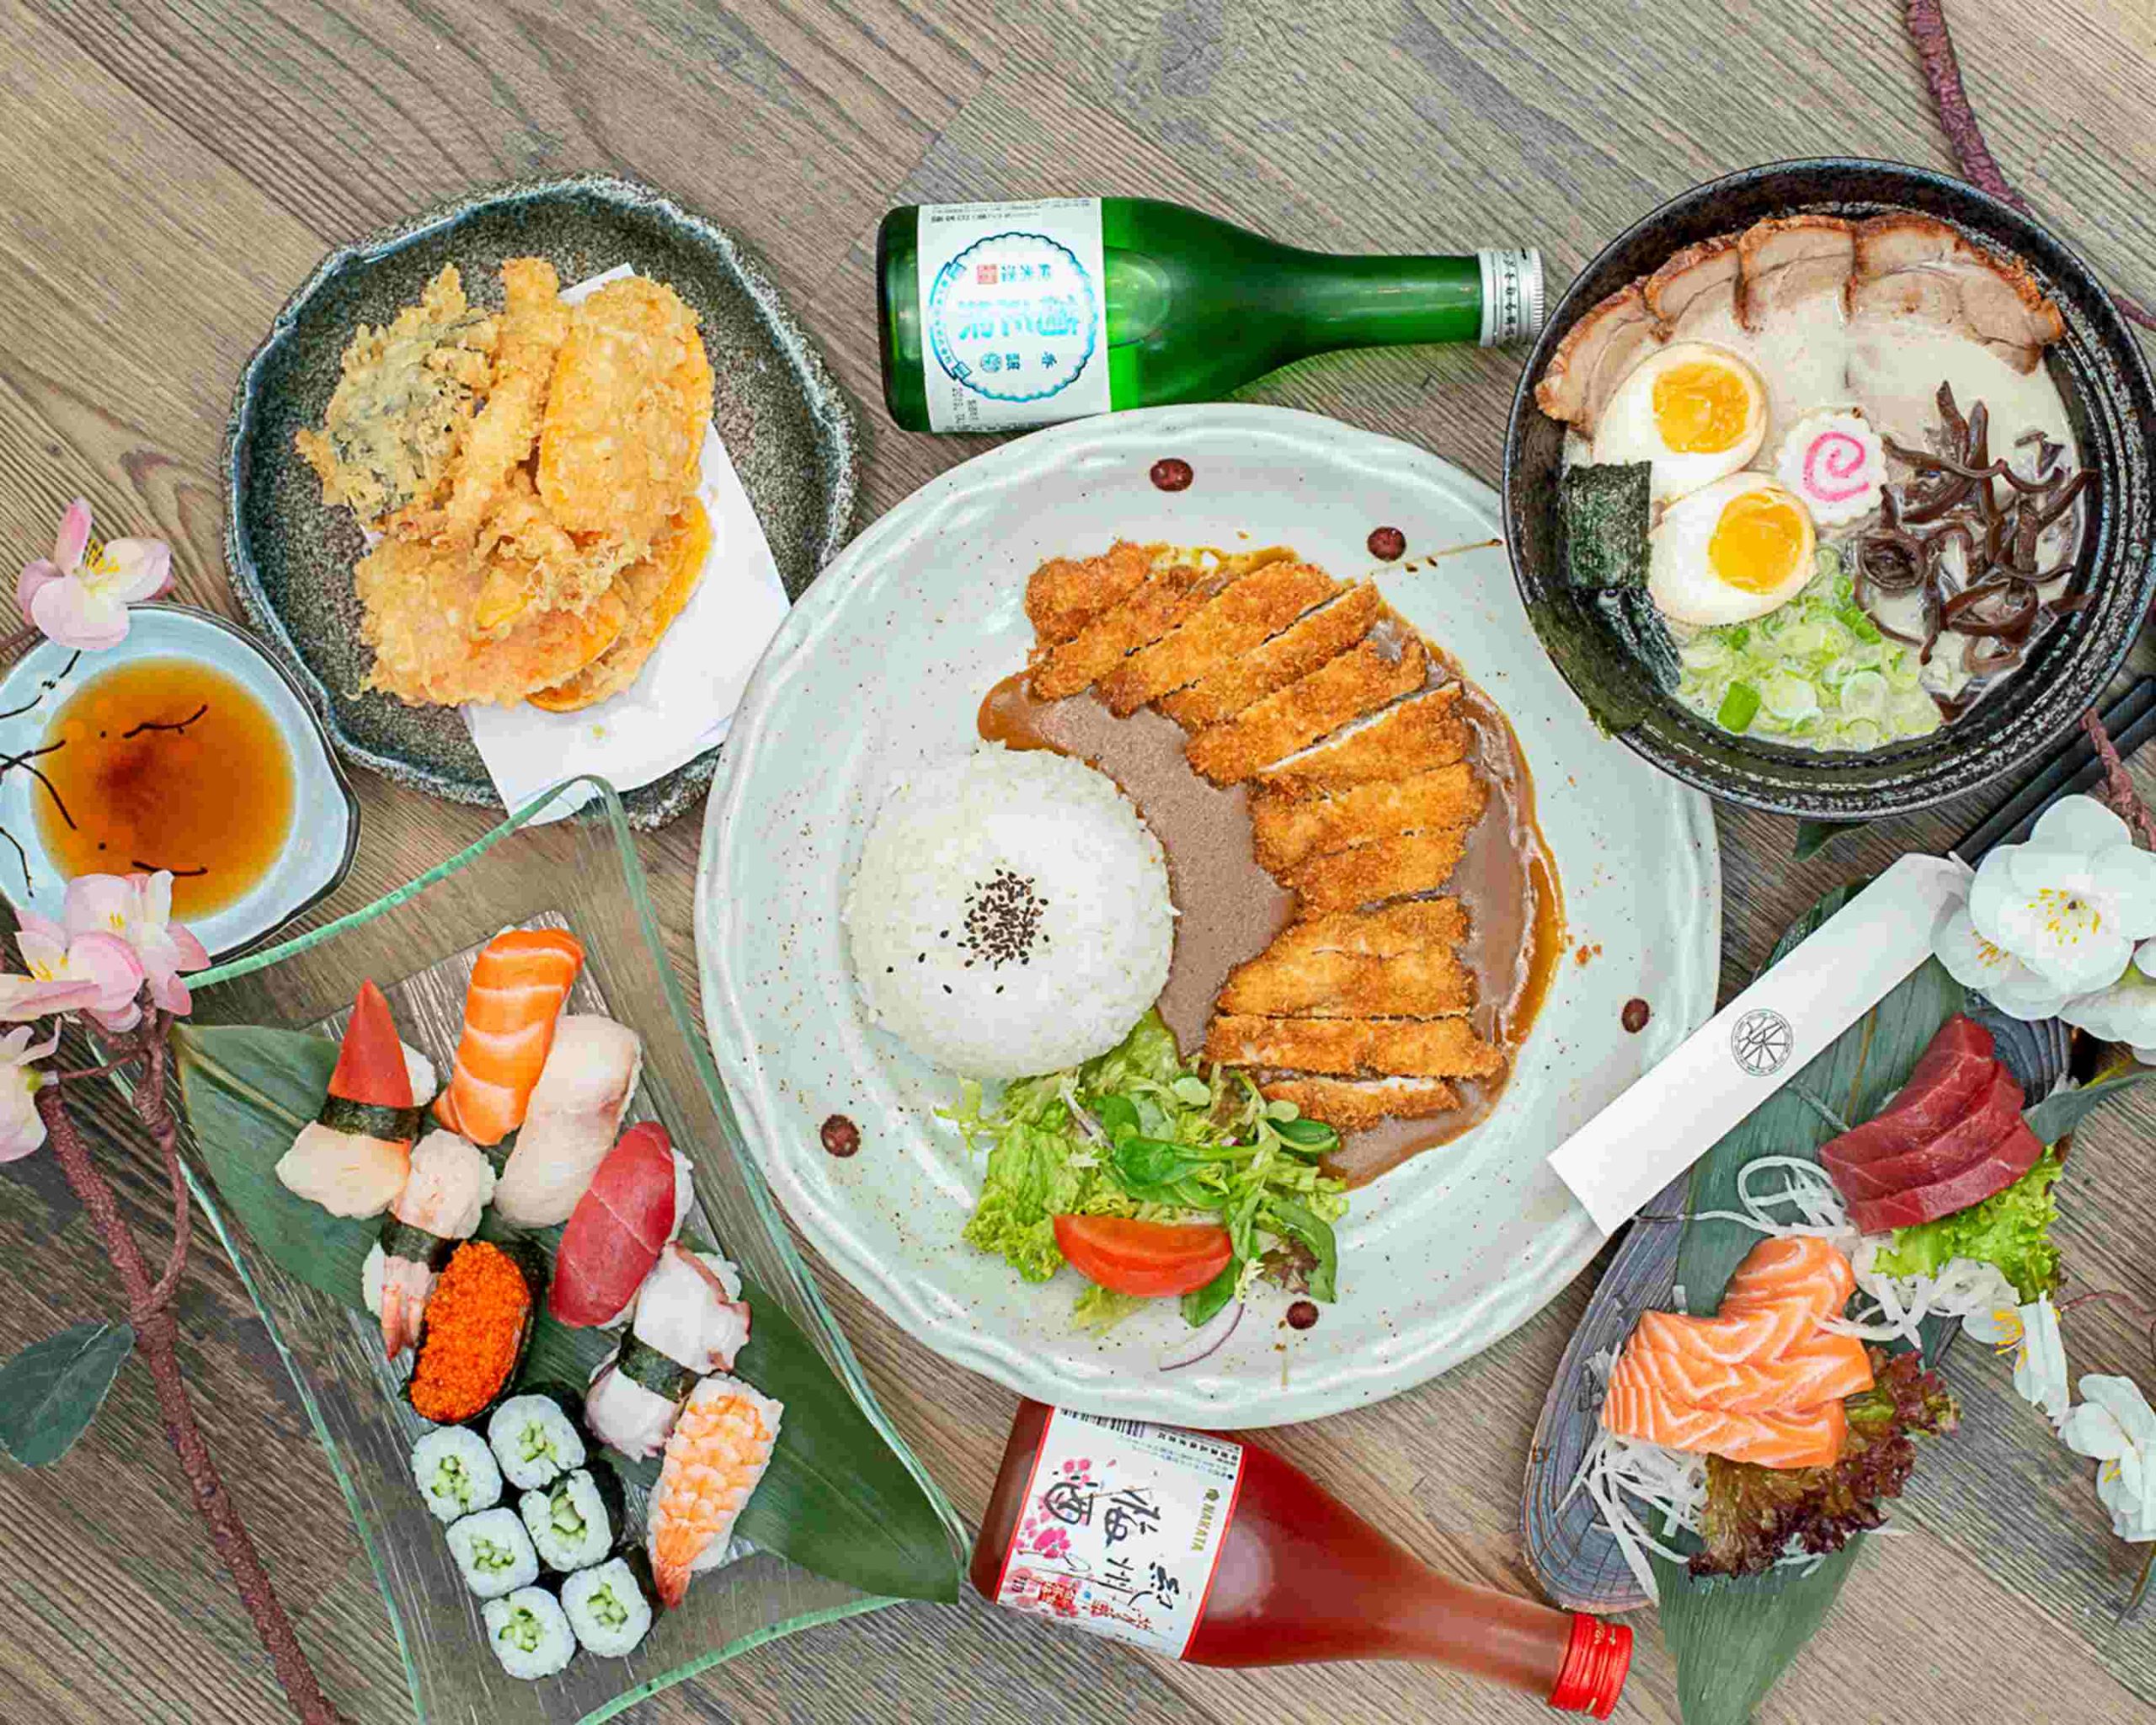 Japanese-style dining in Hanoi